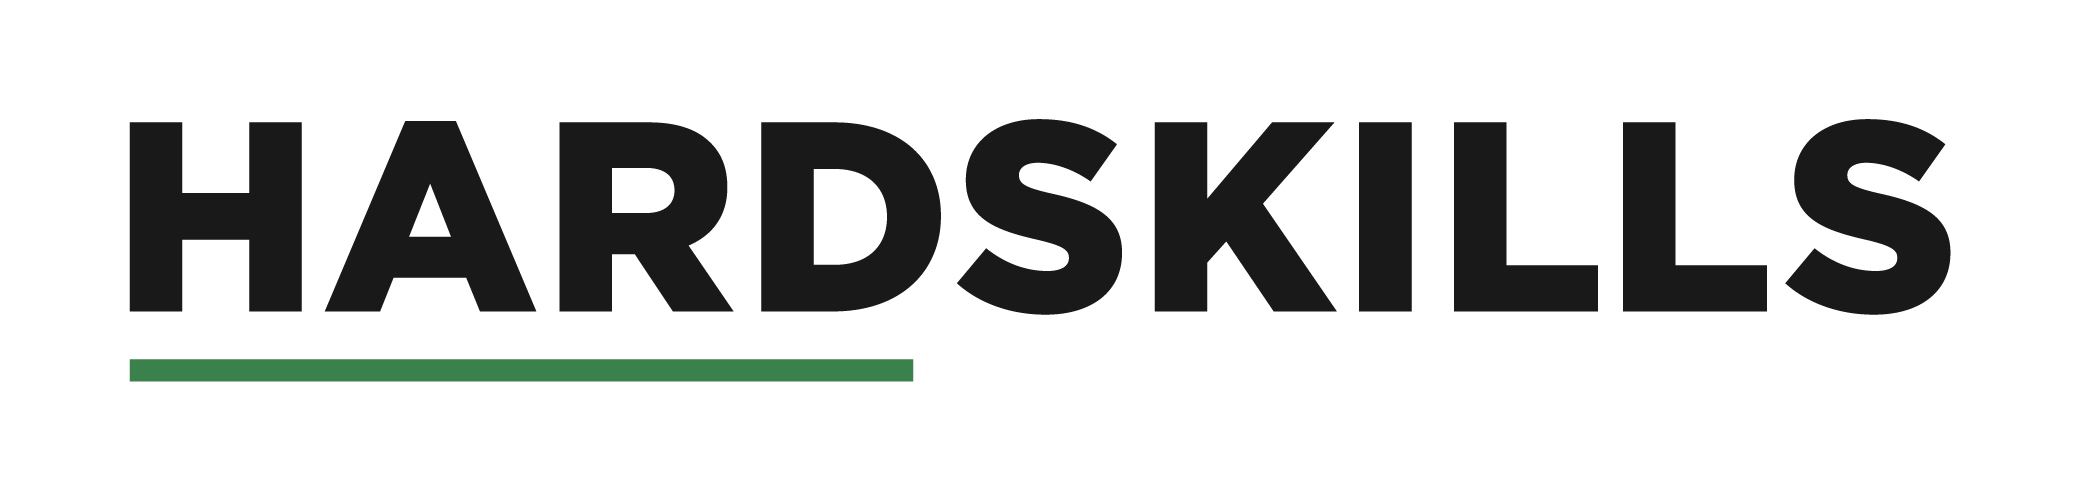 Hardskills logo